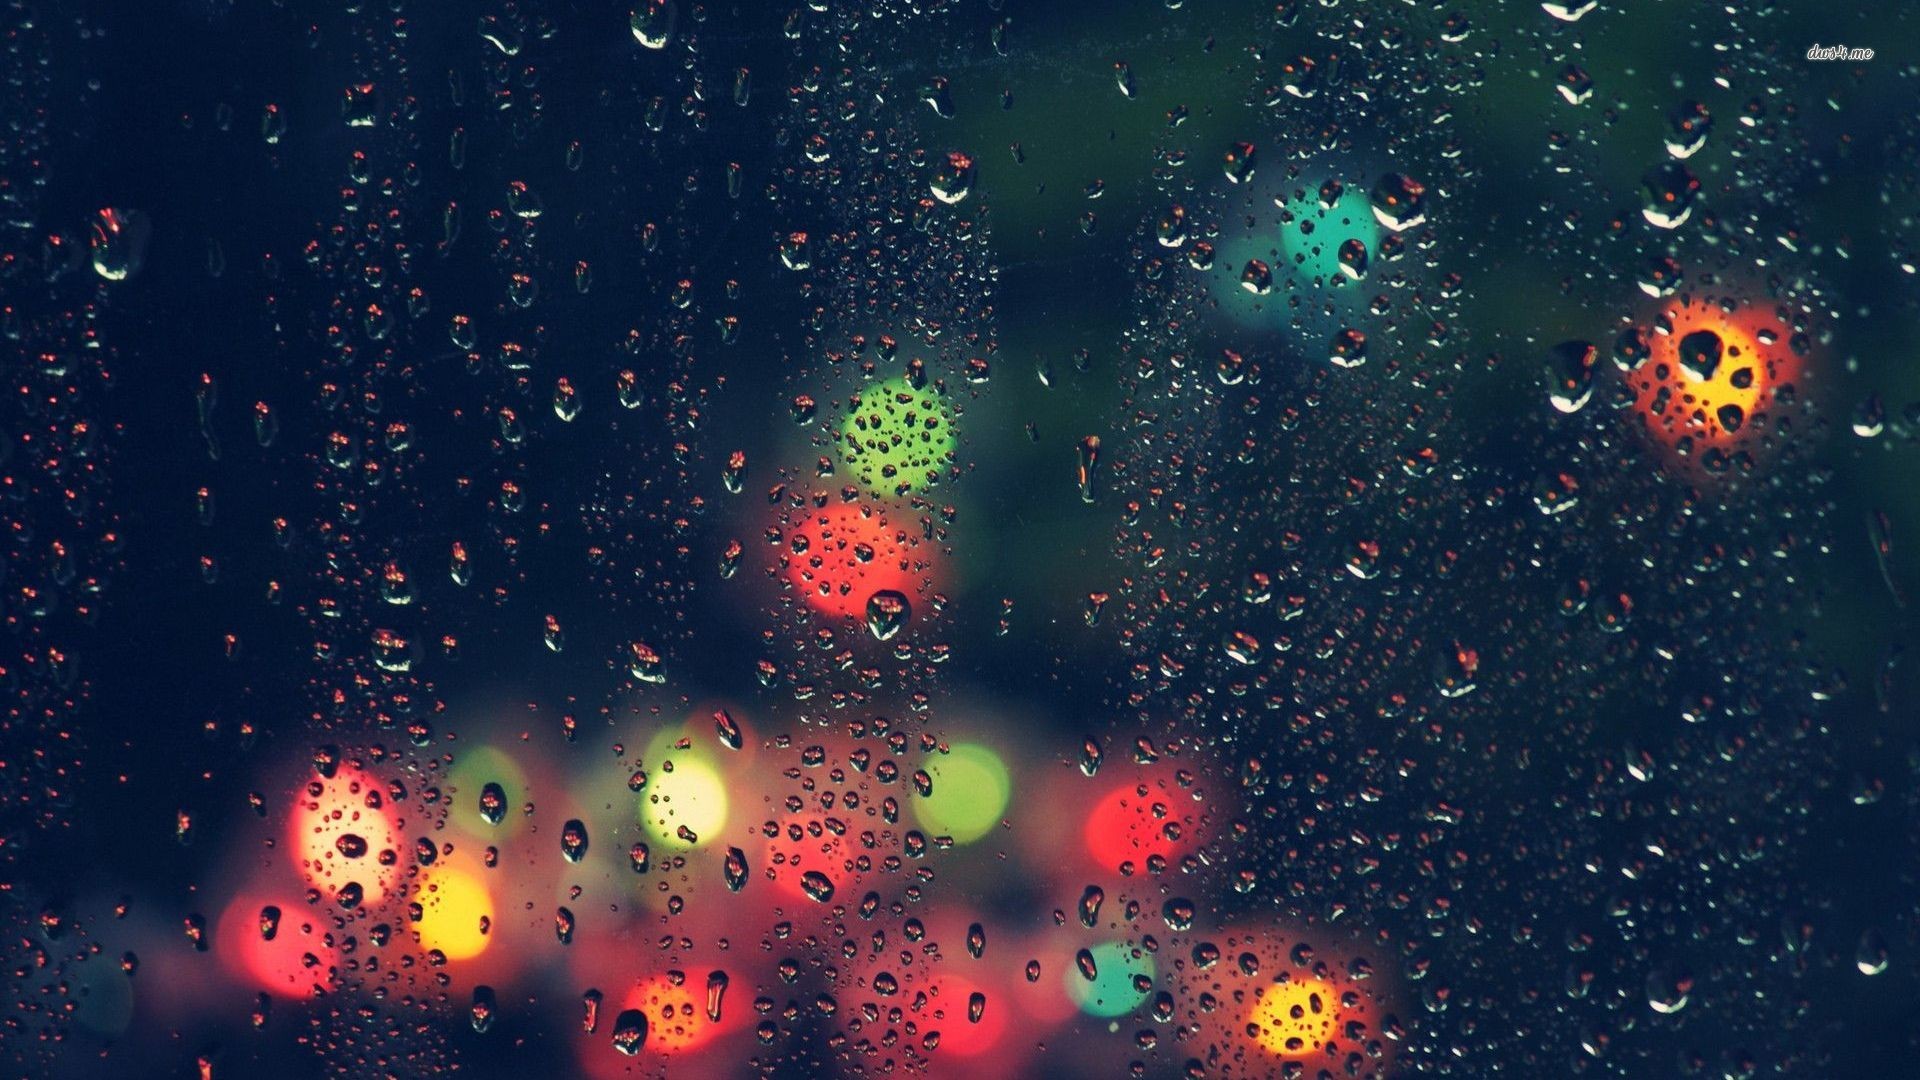 Beyond the rainy window wallpaper â photography wallpapers â